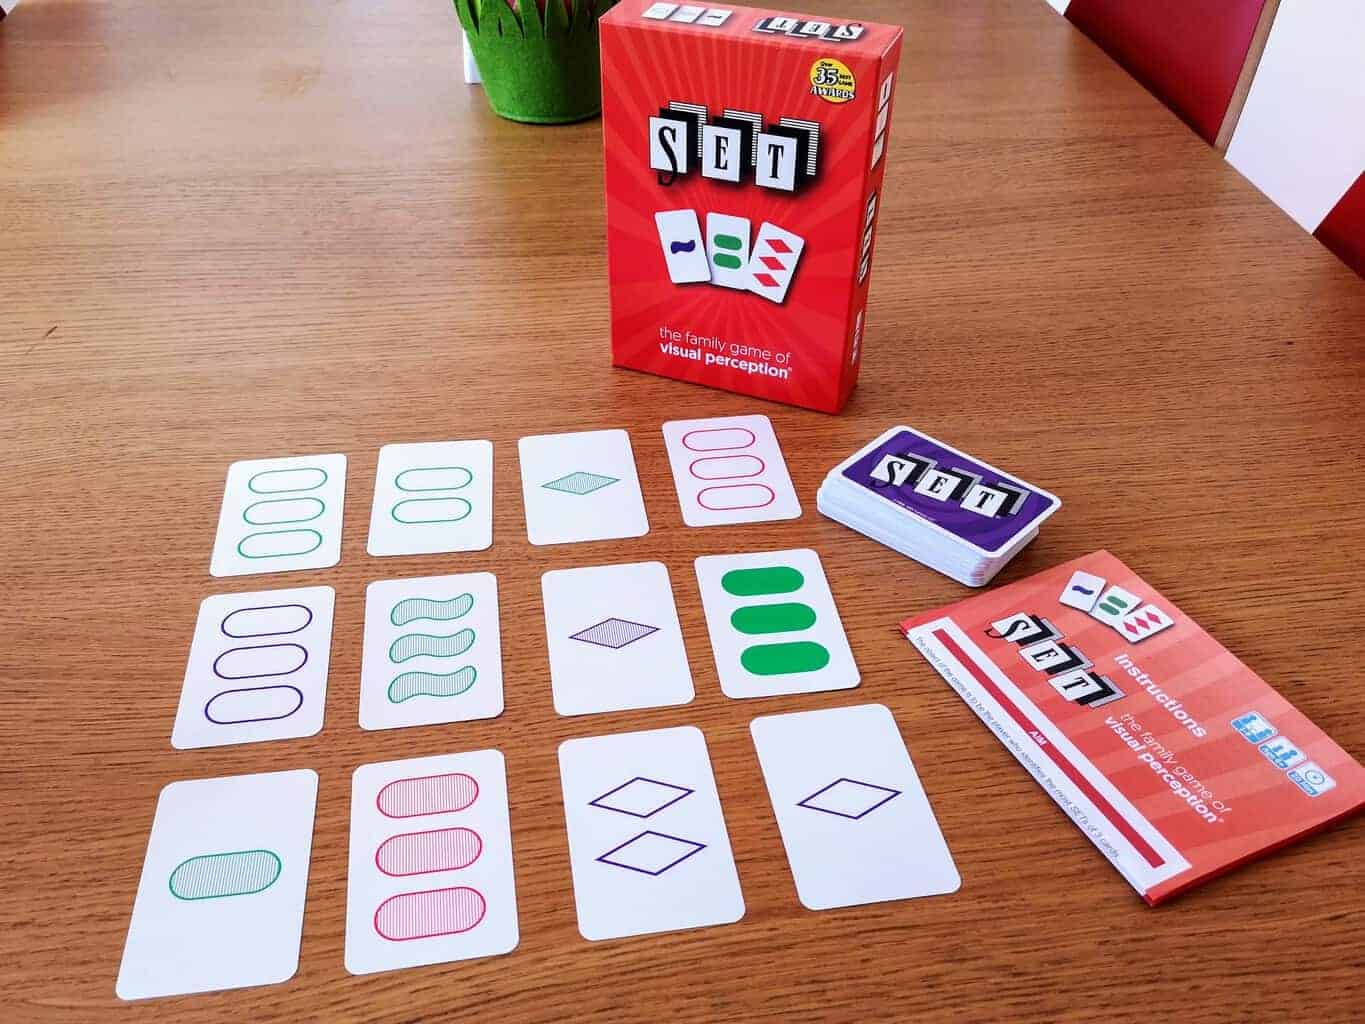 SET - a card game of visual perception